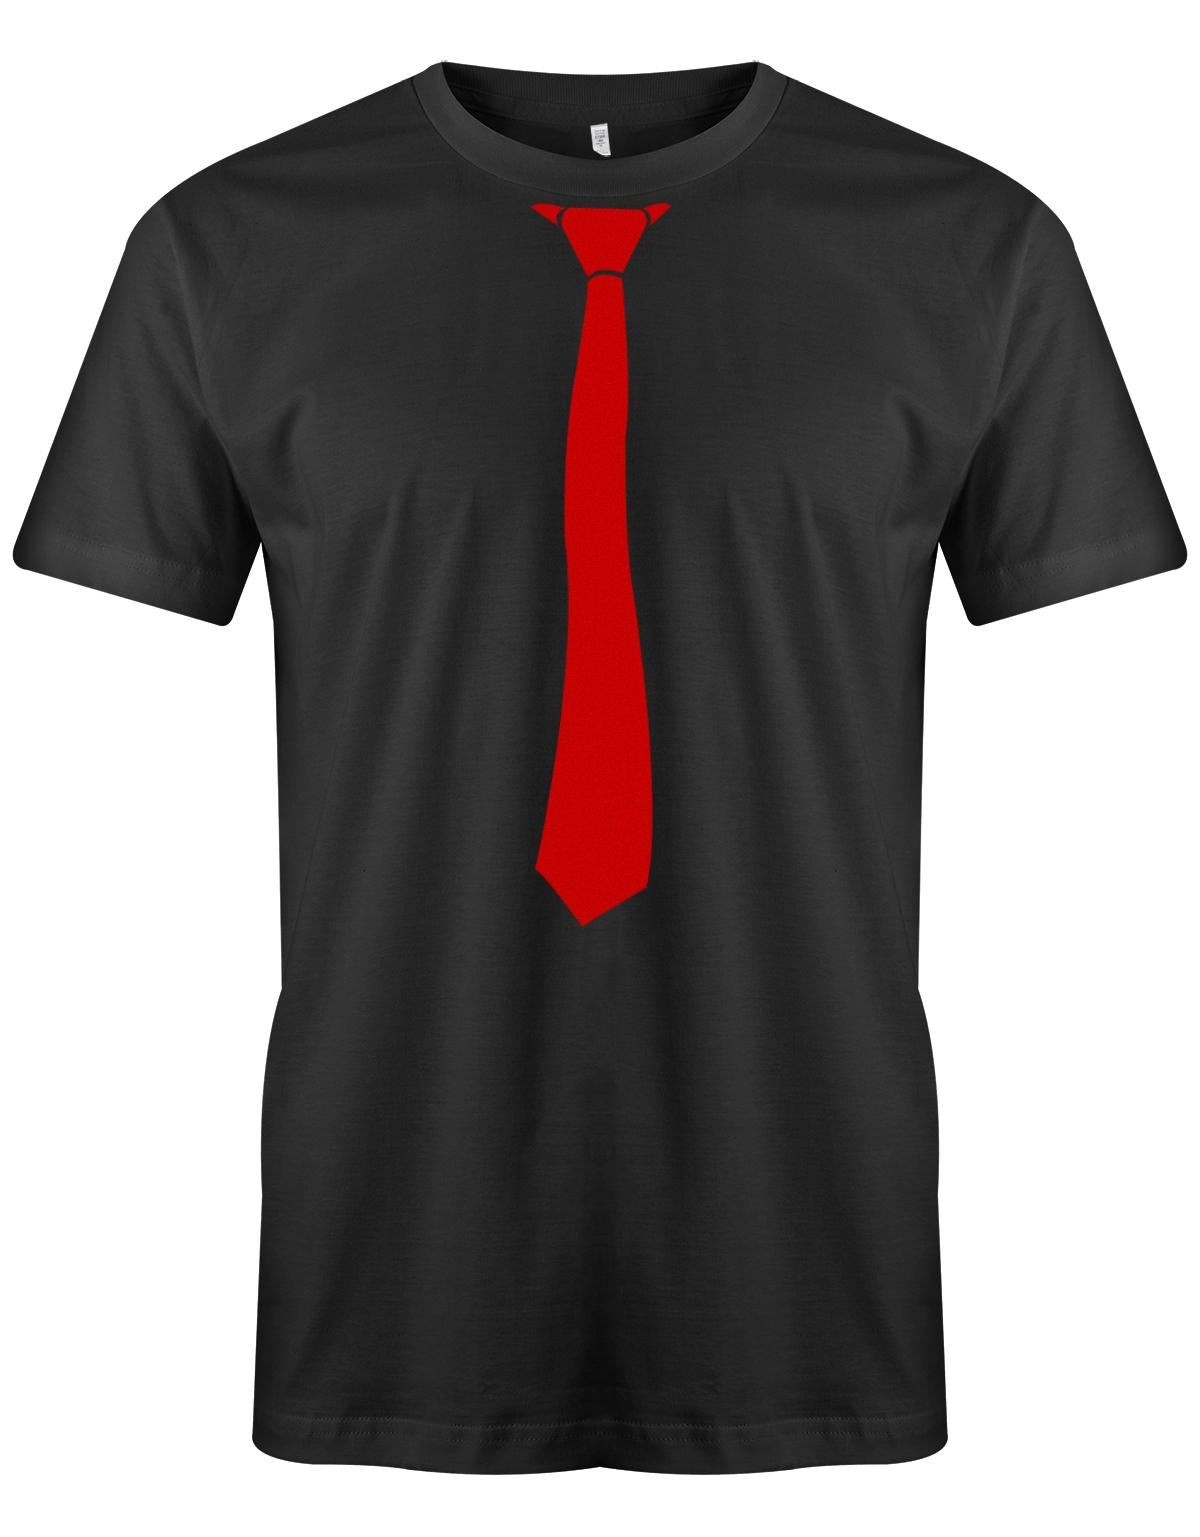 Krawatte-Sportlich-Herren-Shirt-JGA-Schwarz-Rot